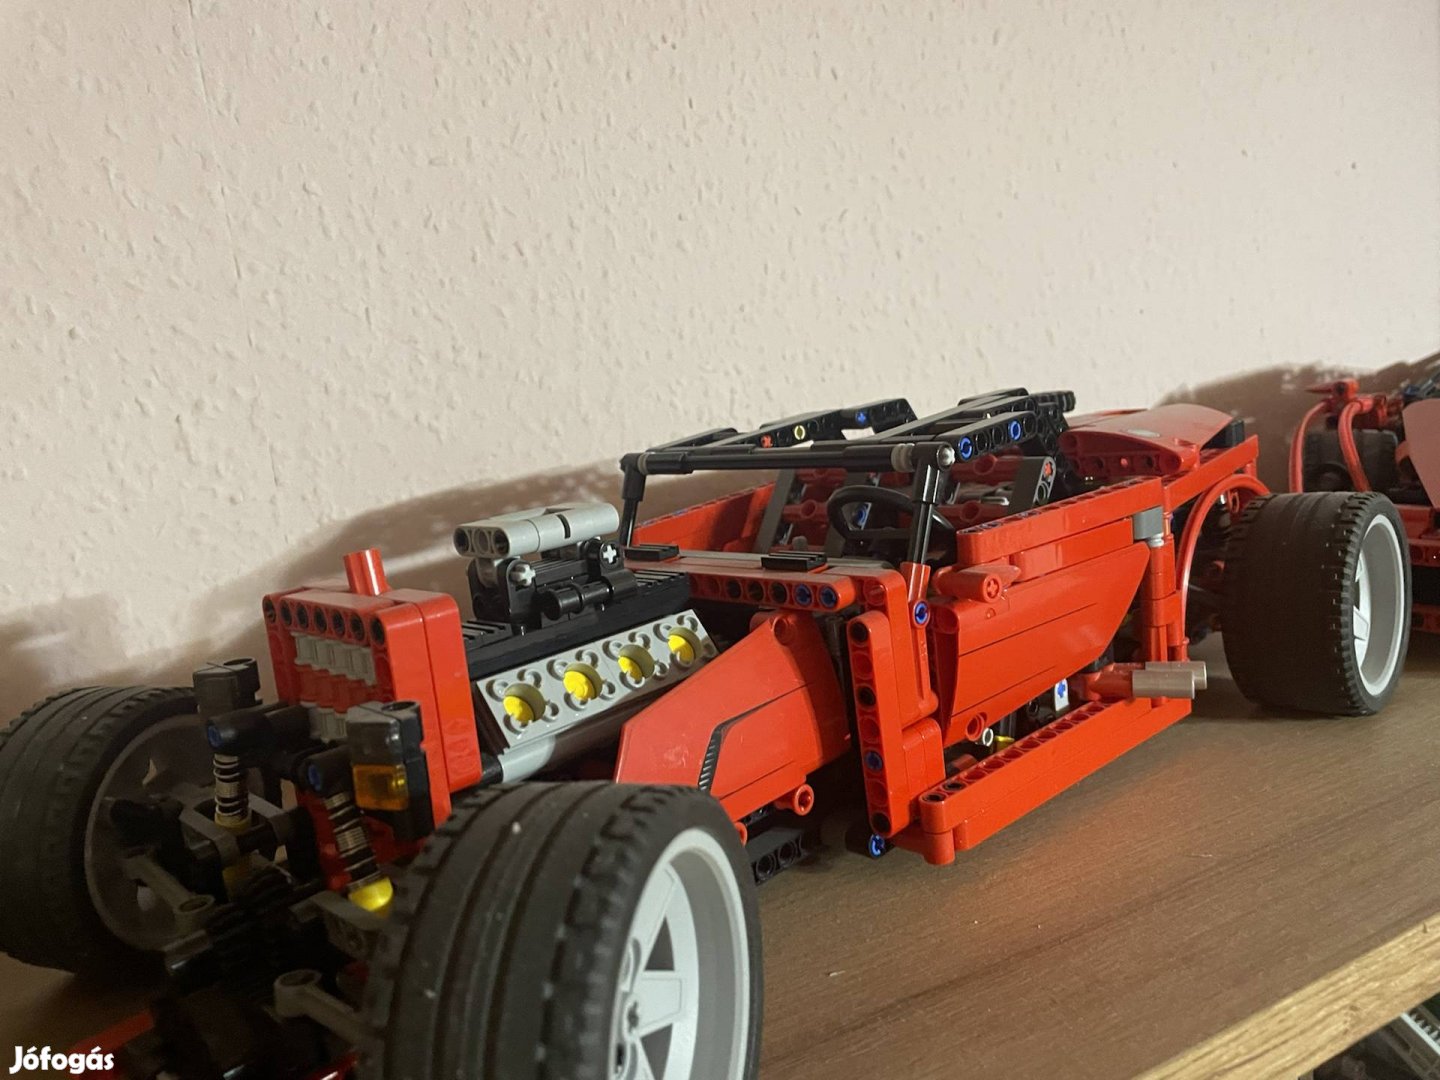 Lego Technic 8070 Hot Rod V8